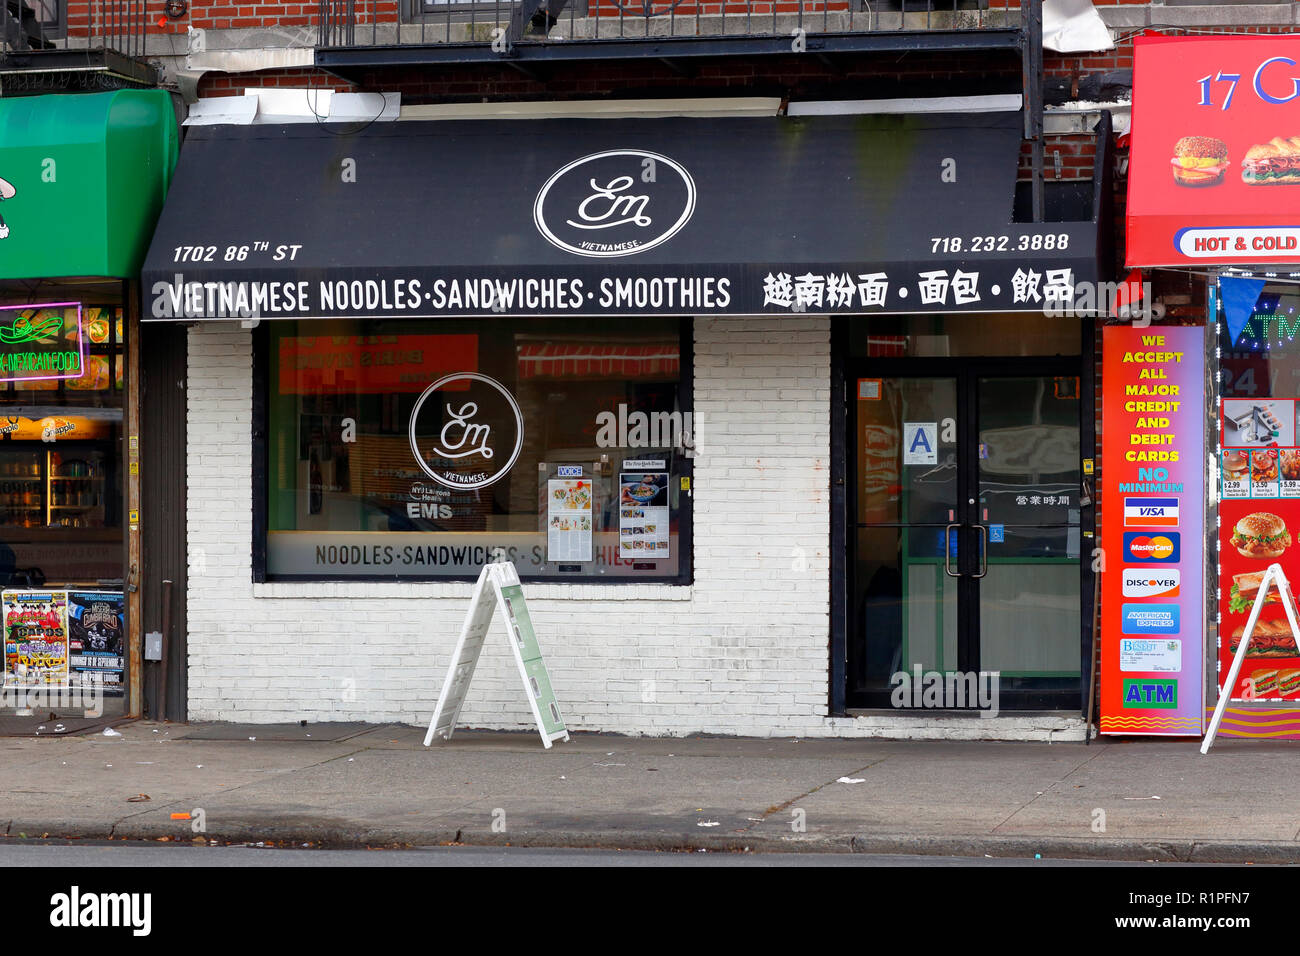 Em, 1702 86st, Brooklyn, New York. esterno di un ristorante Vietnamita in Bensonhurst Foto Stock